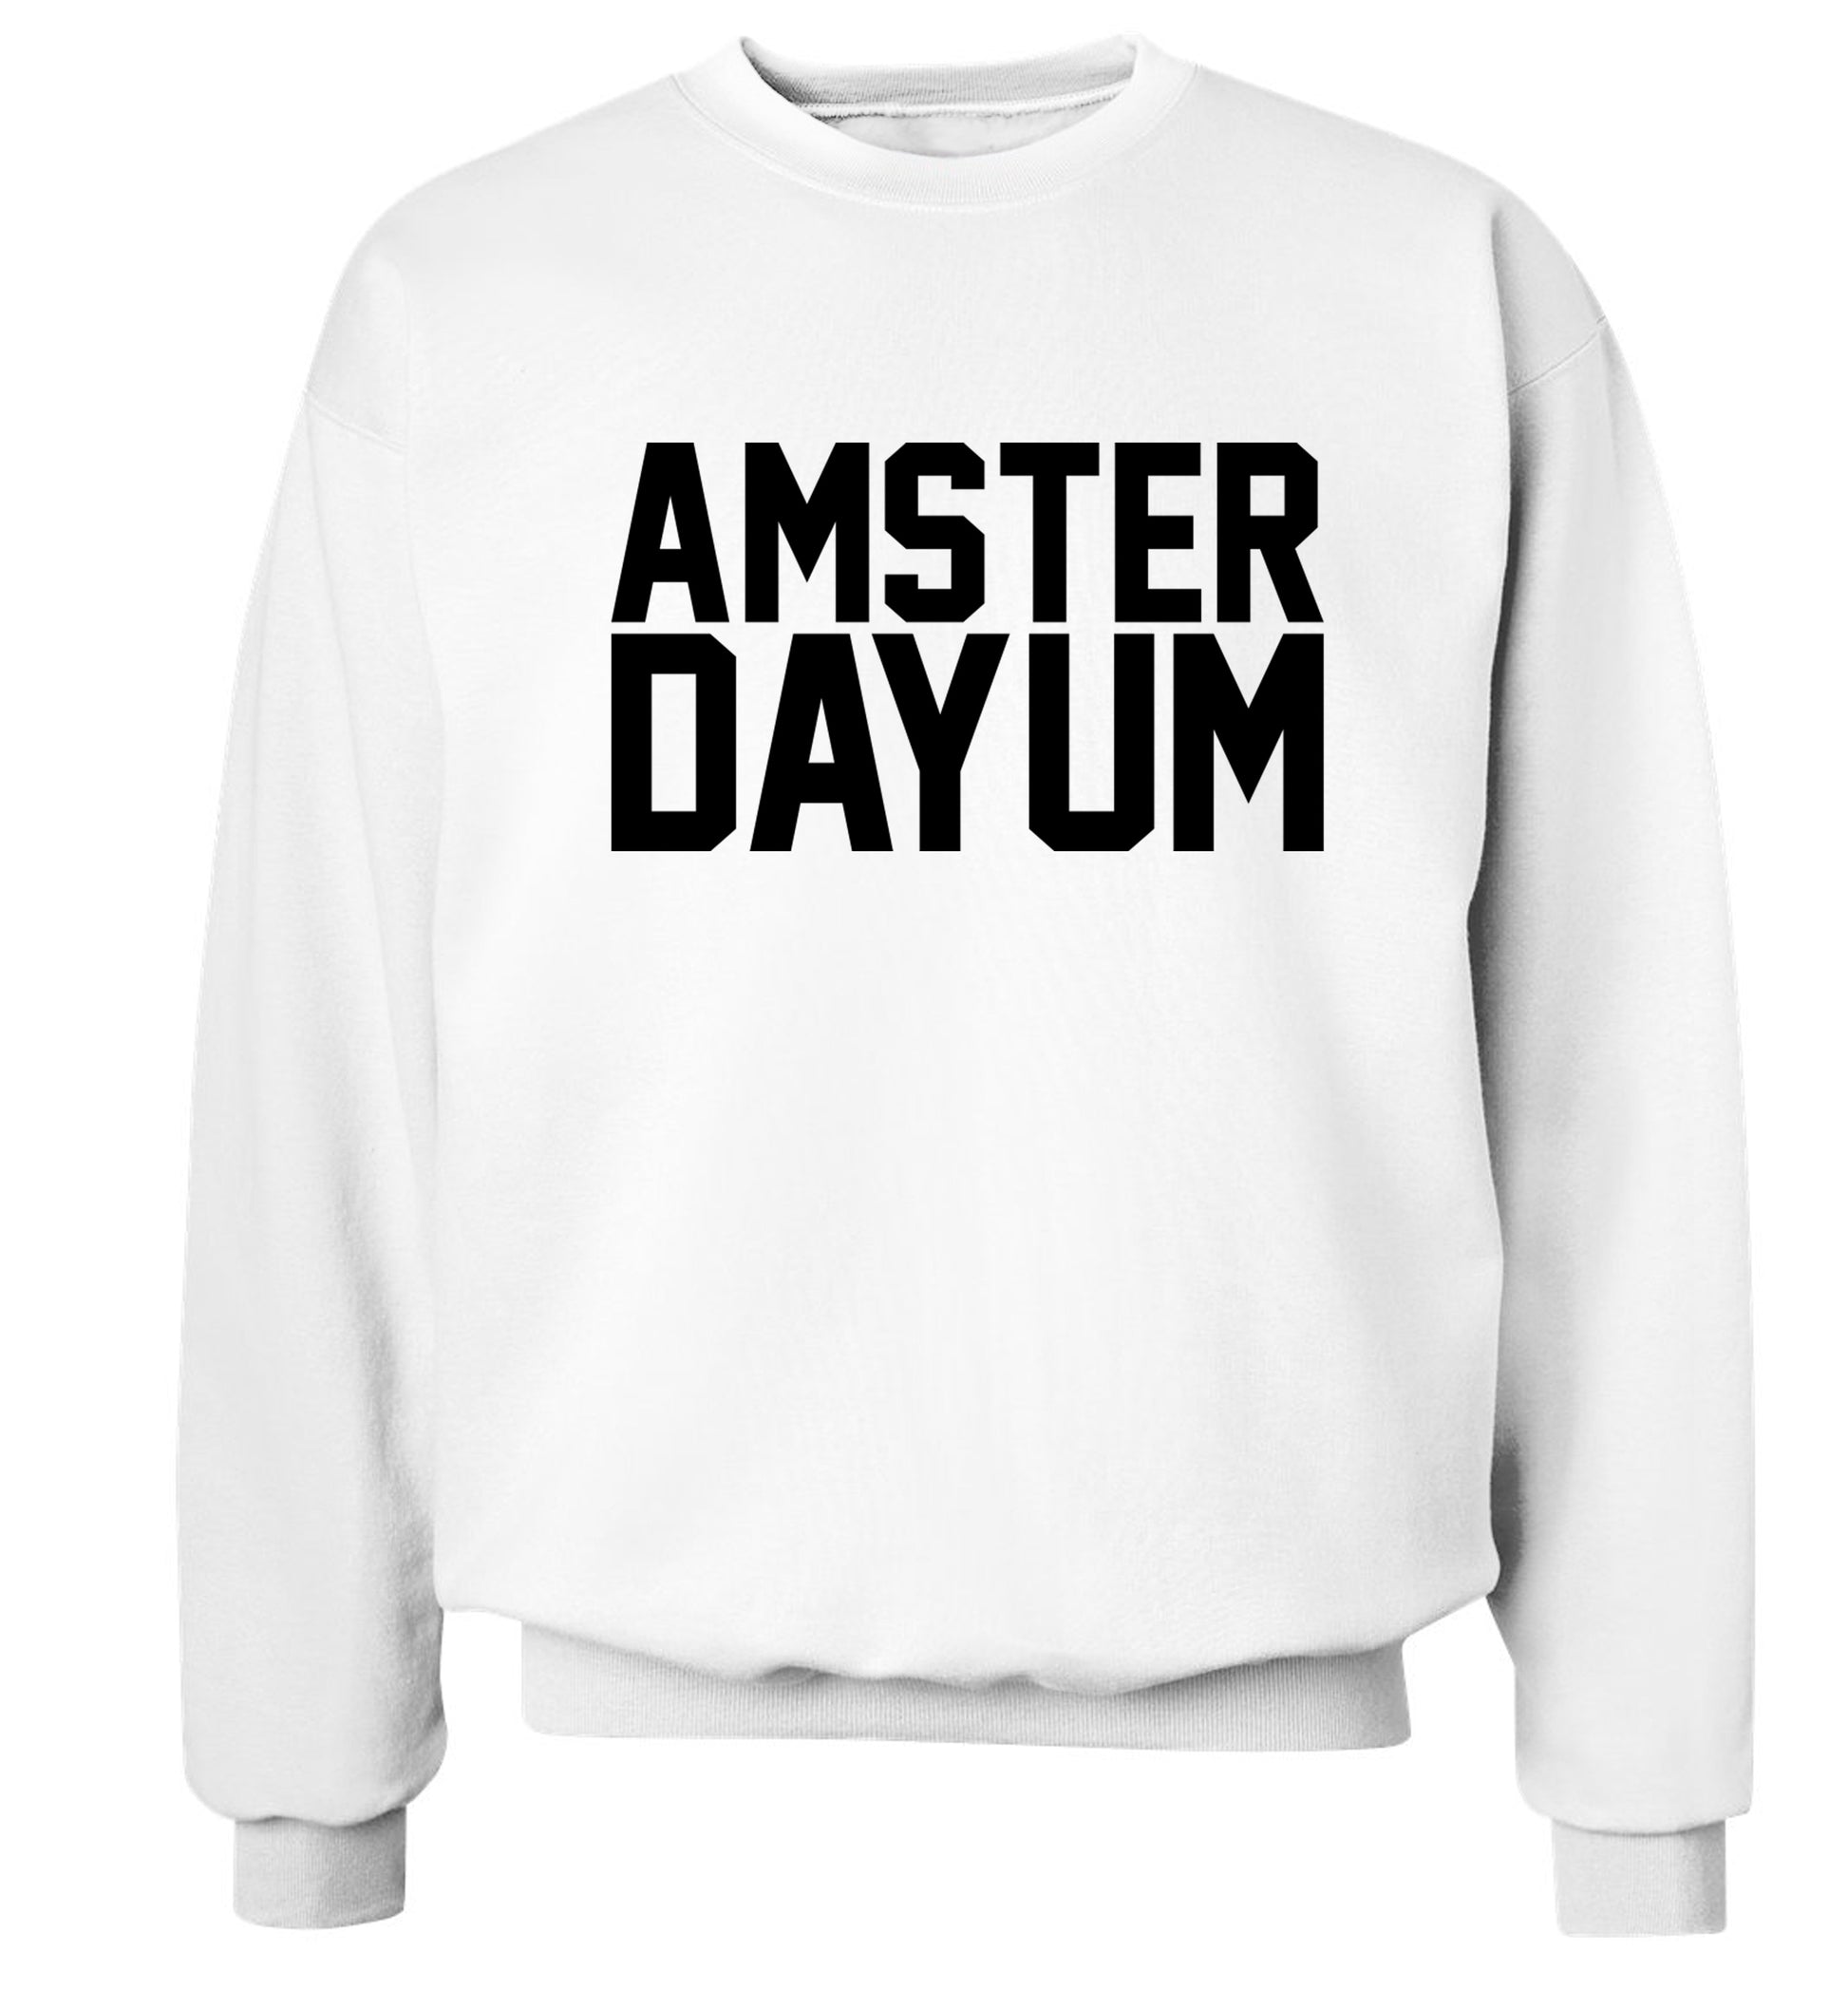 Amsterdayum Adult's unisex white Sweater 2XL